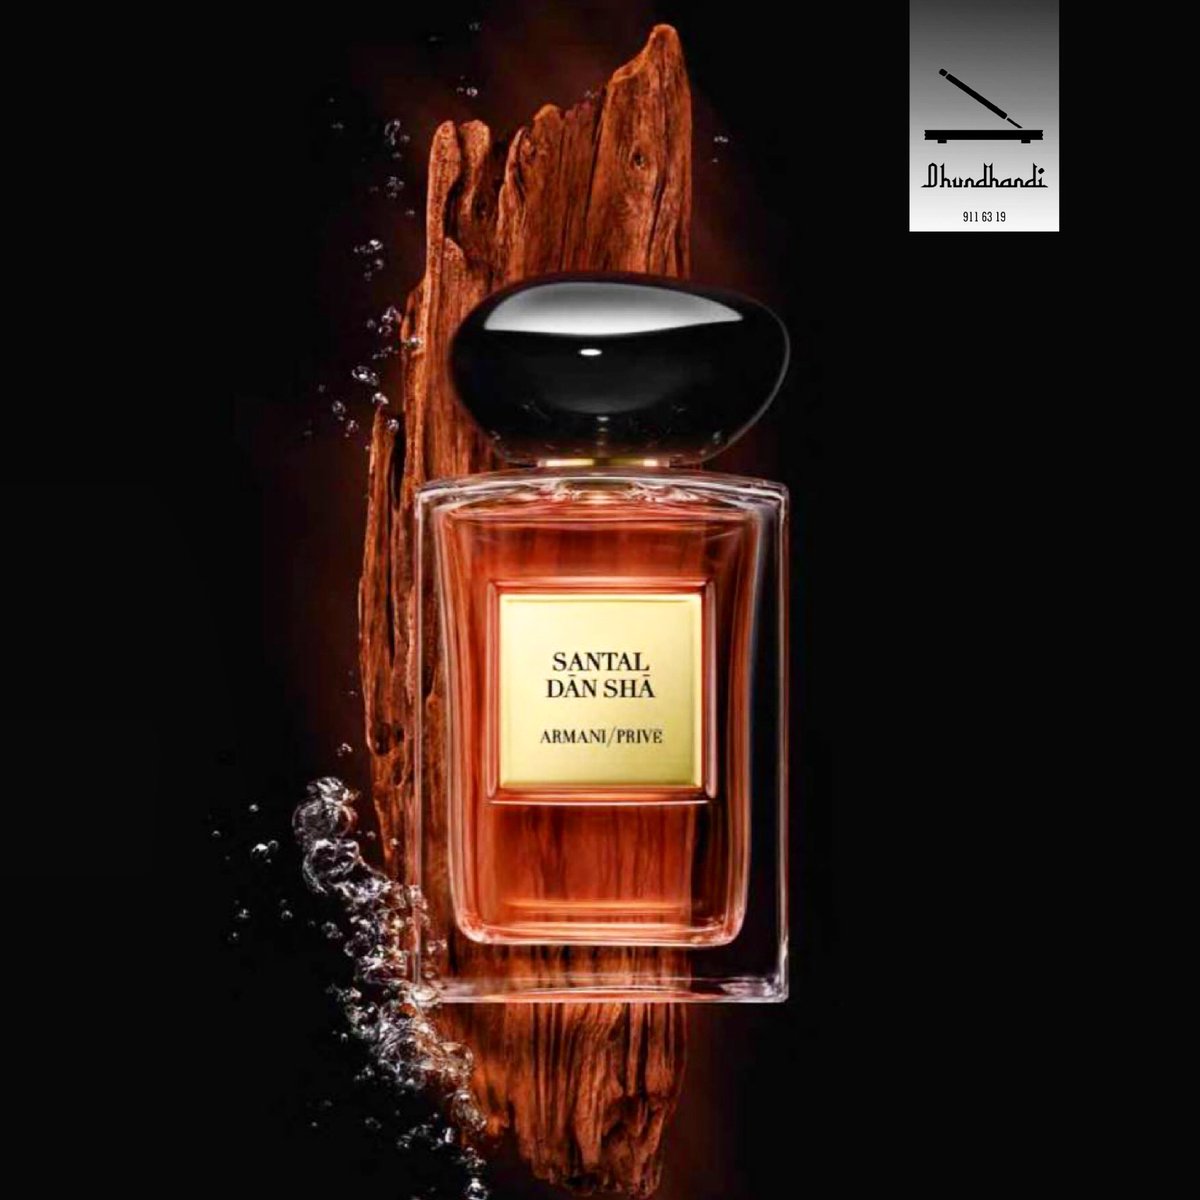 Santal Dān Shā by Armani 
Woody fragrance for women and men
#perfumeoil #attar ♂️ ♀️